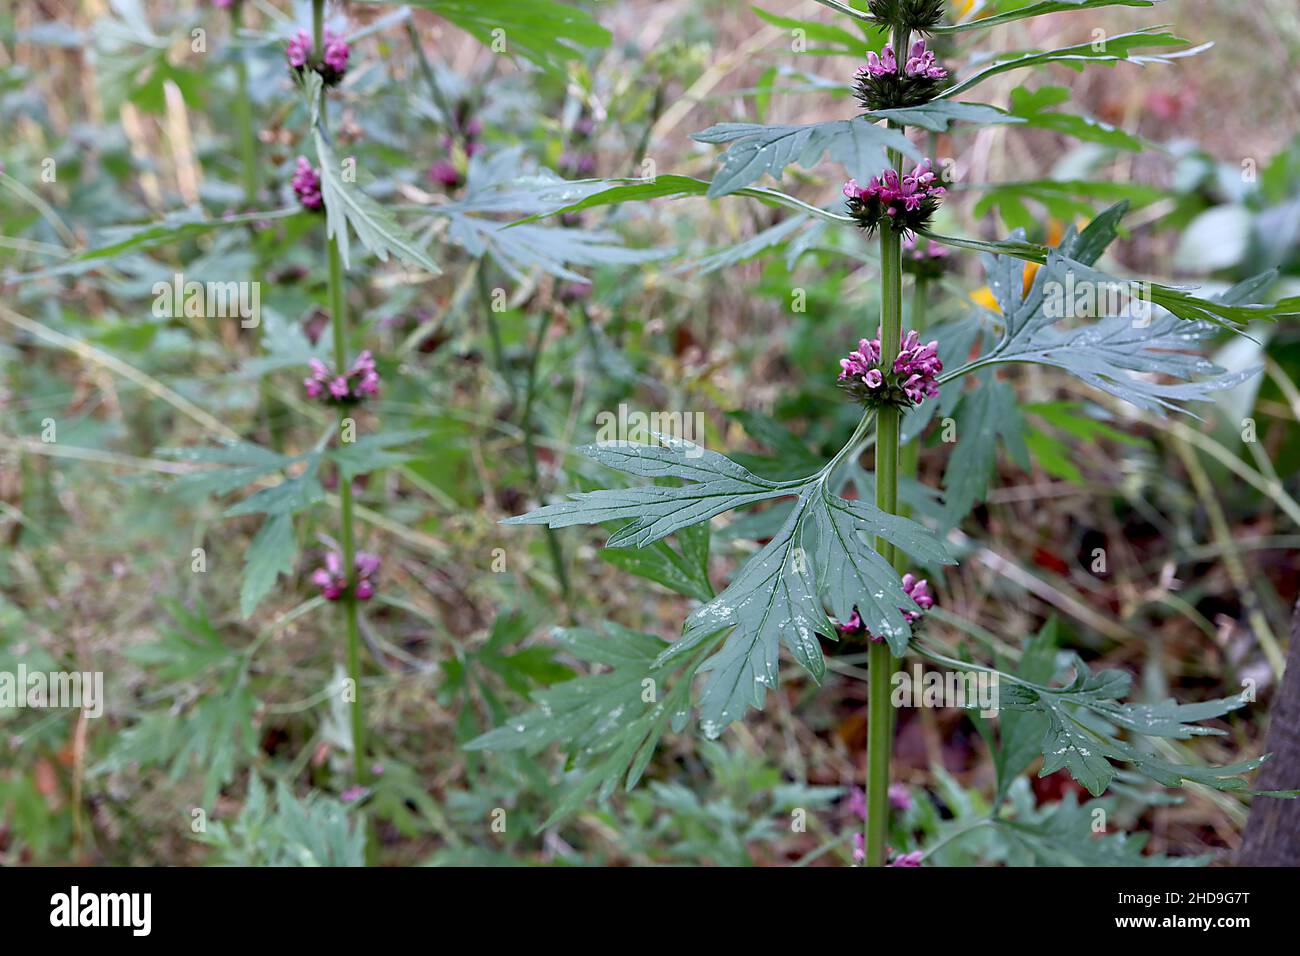 Leonurus cardiaca motherwort – whorls of small violet flowers and dark green palmately lobed leaves on tall stems,  December, England, UK Stock Photo